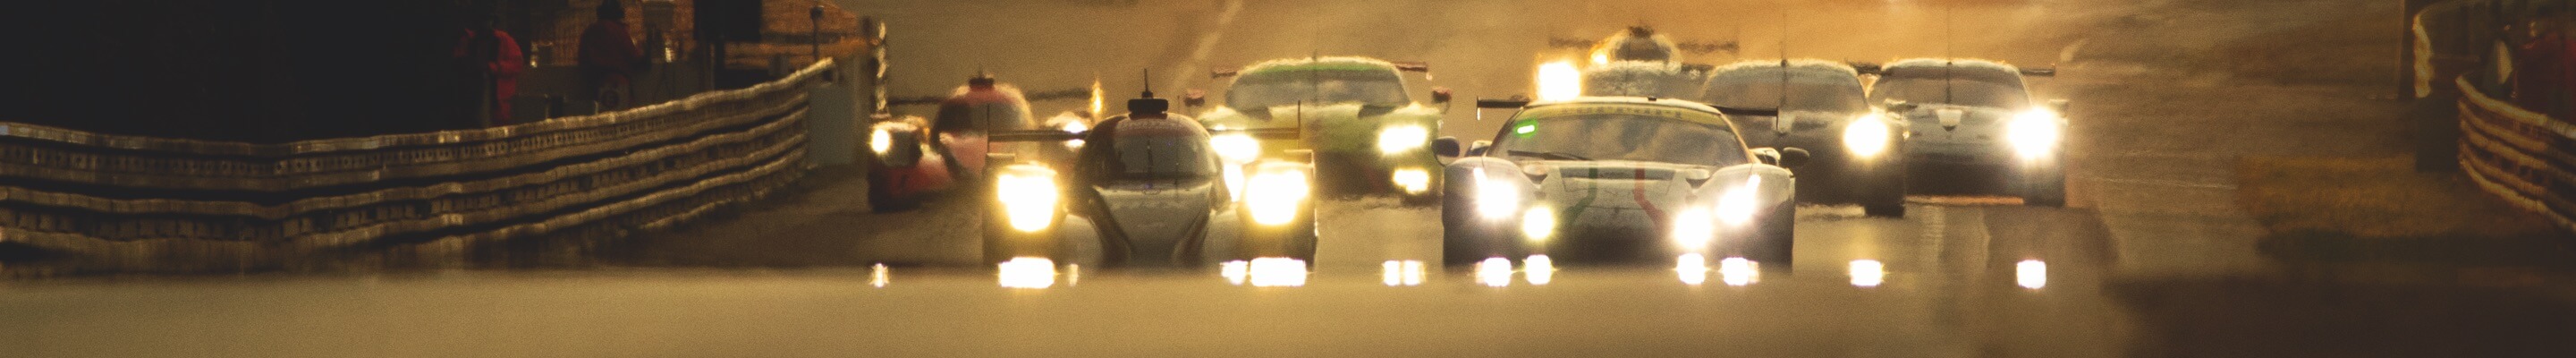 Le Mans 24 Saat Yarışı ve Rolex Oyster Perpetual Cosmograph Daytona